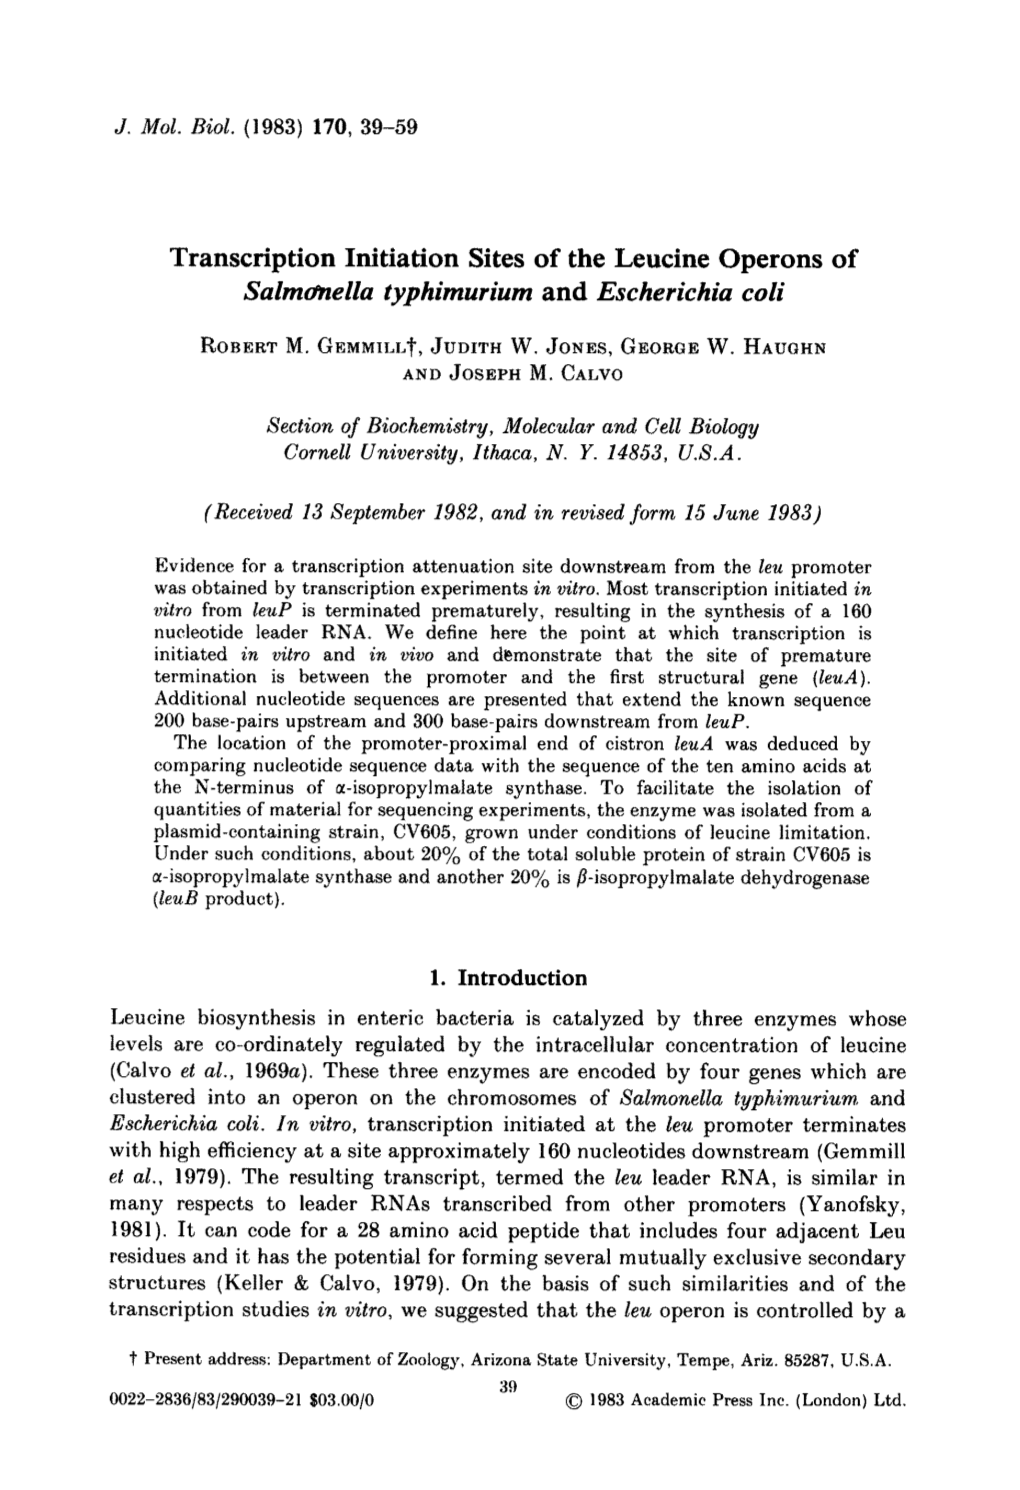 Transcription Initiation Sites of the Leucine Operons of Salmonella Typhimurium and Escherichia Coli